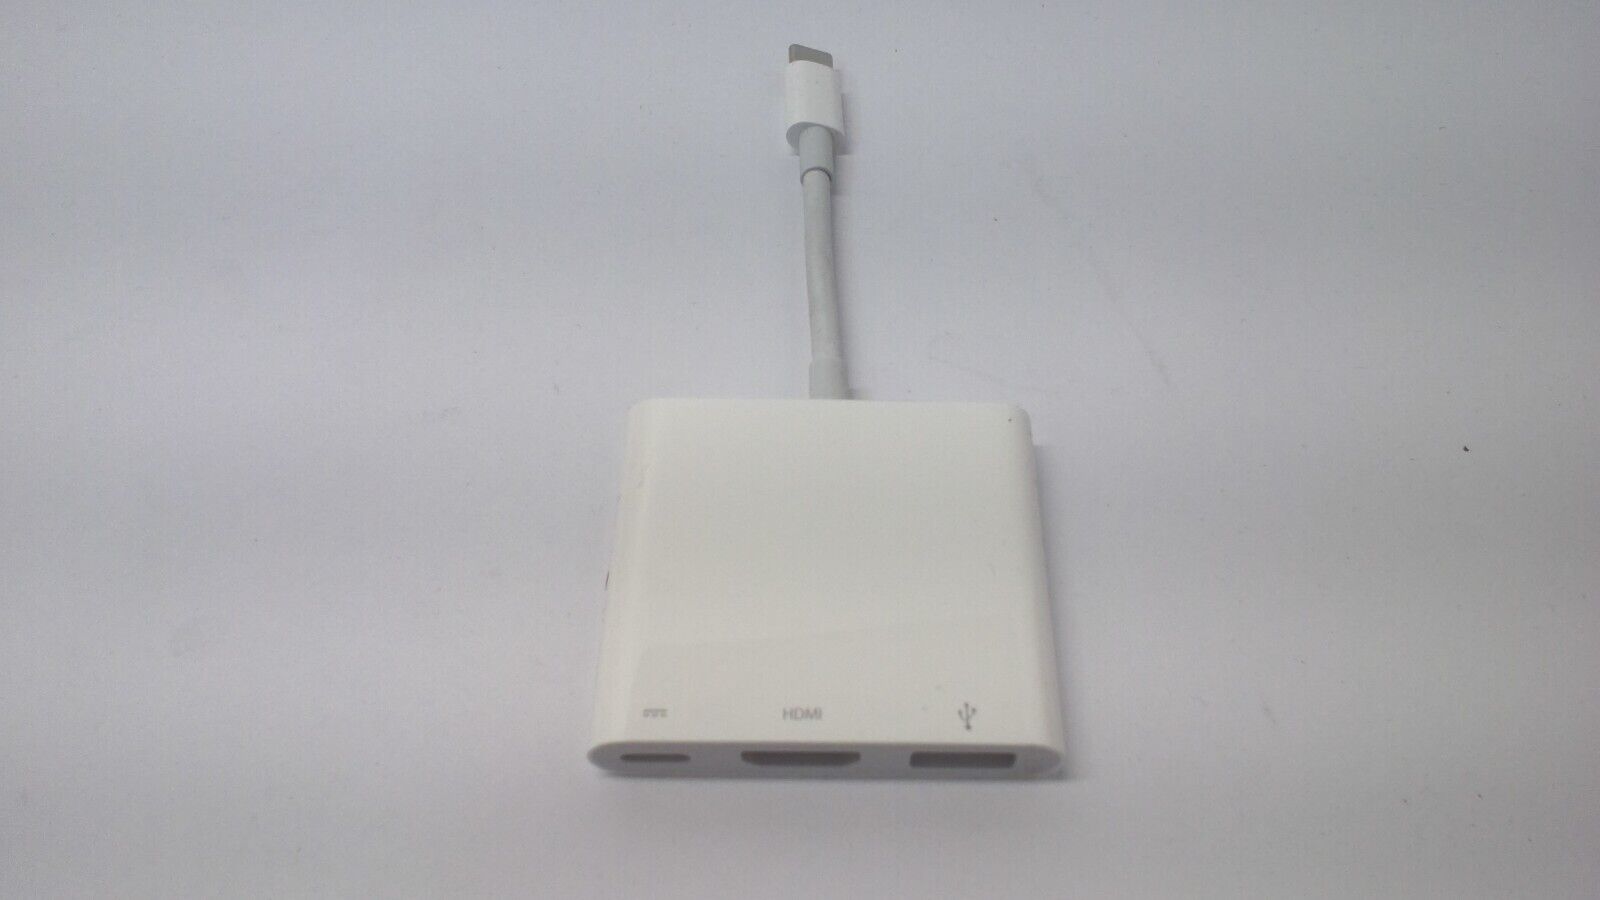 USB-C Digital AV Multiport Adapter For Apple A1621 MUF82AM/A Used